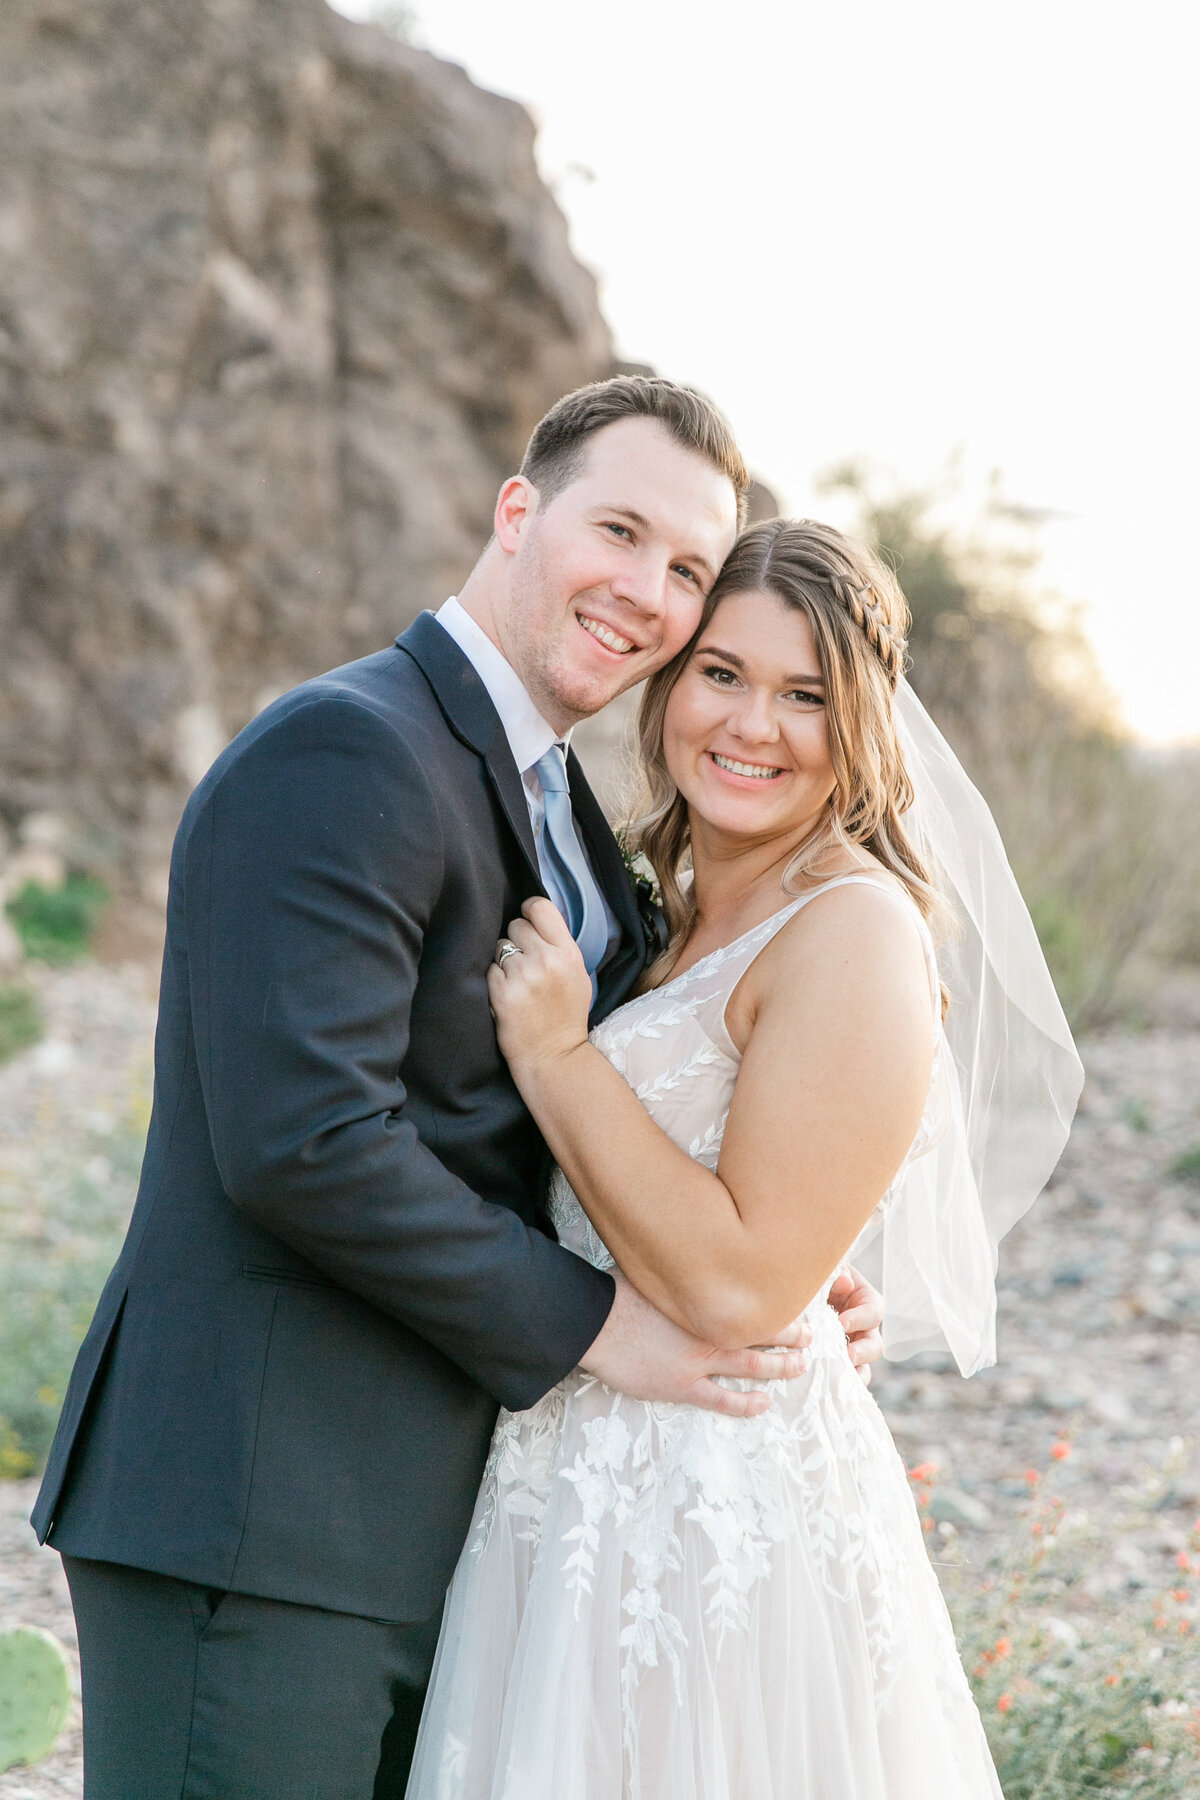 Karlie Colleen Photography - Arizona Backyard wedding - Brittney & Josh-237